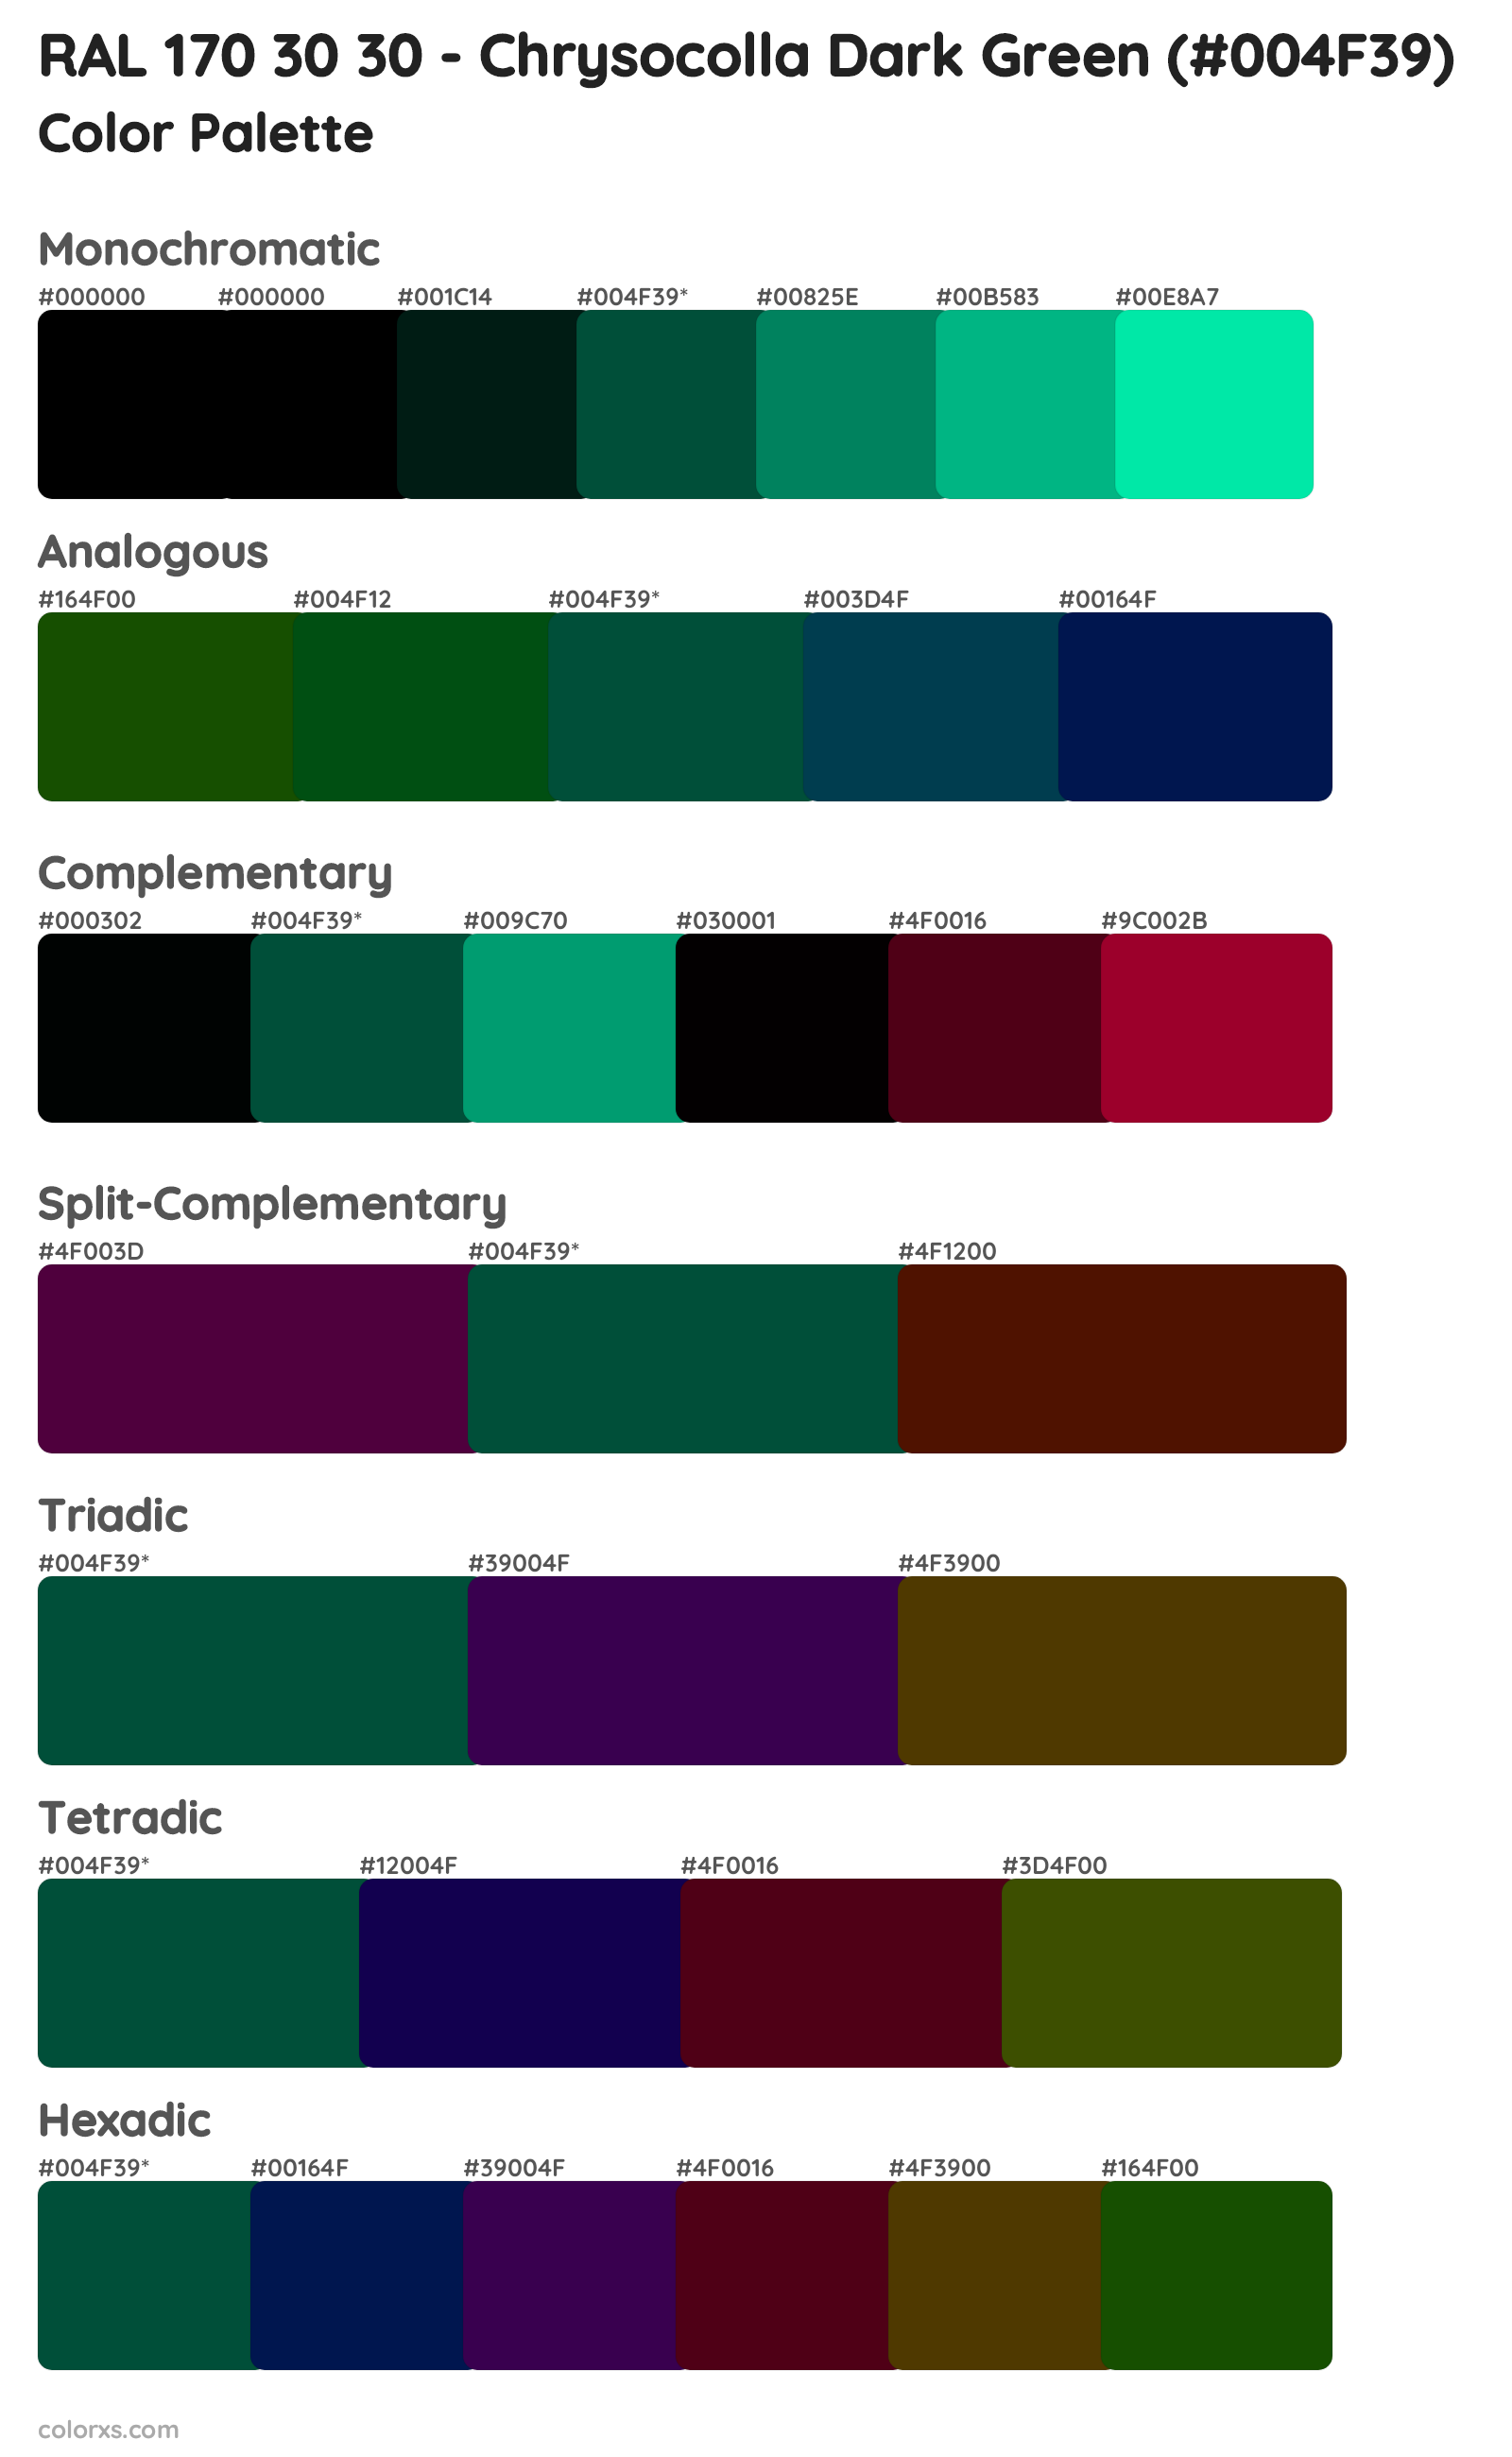 RAL 170 30 30 - Chrysocolla Dark Green Color Scheme Palettes